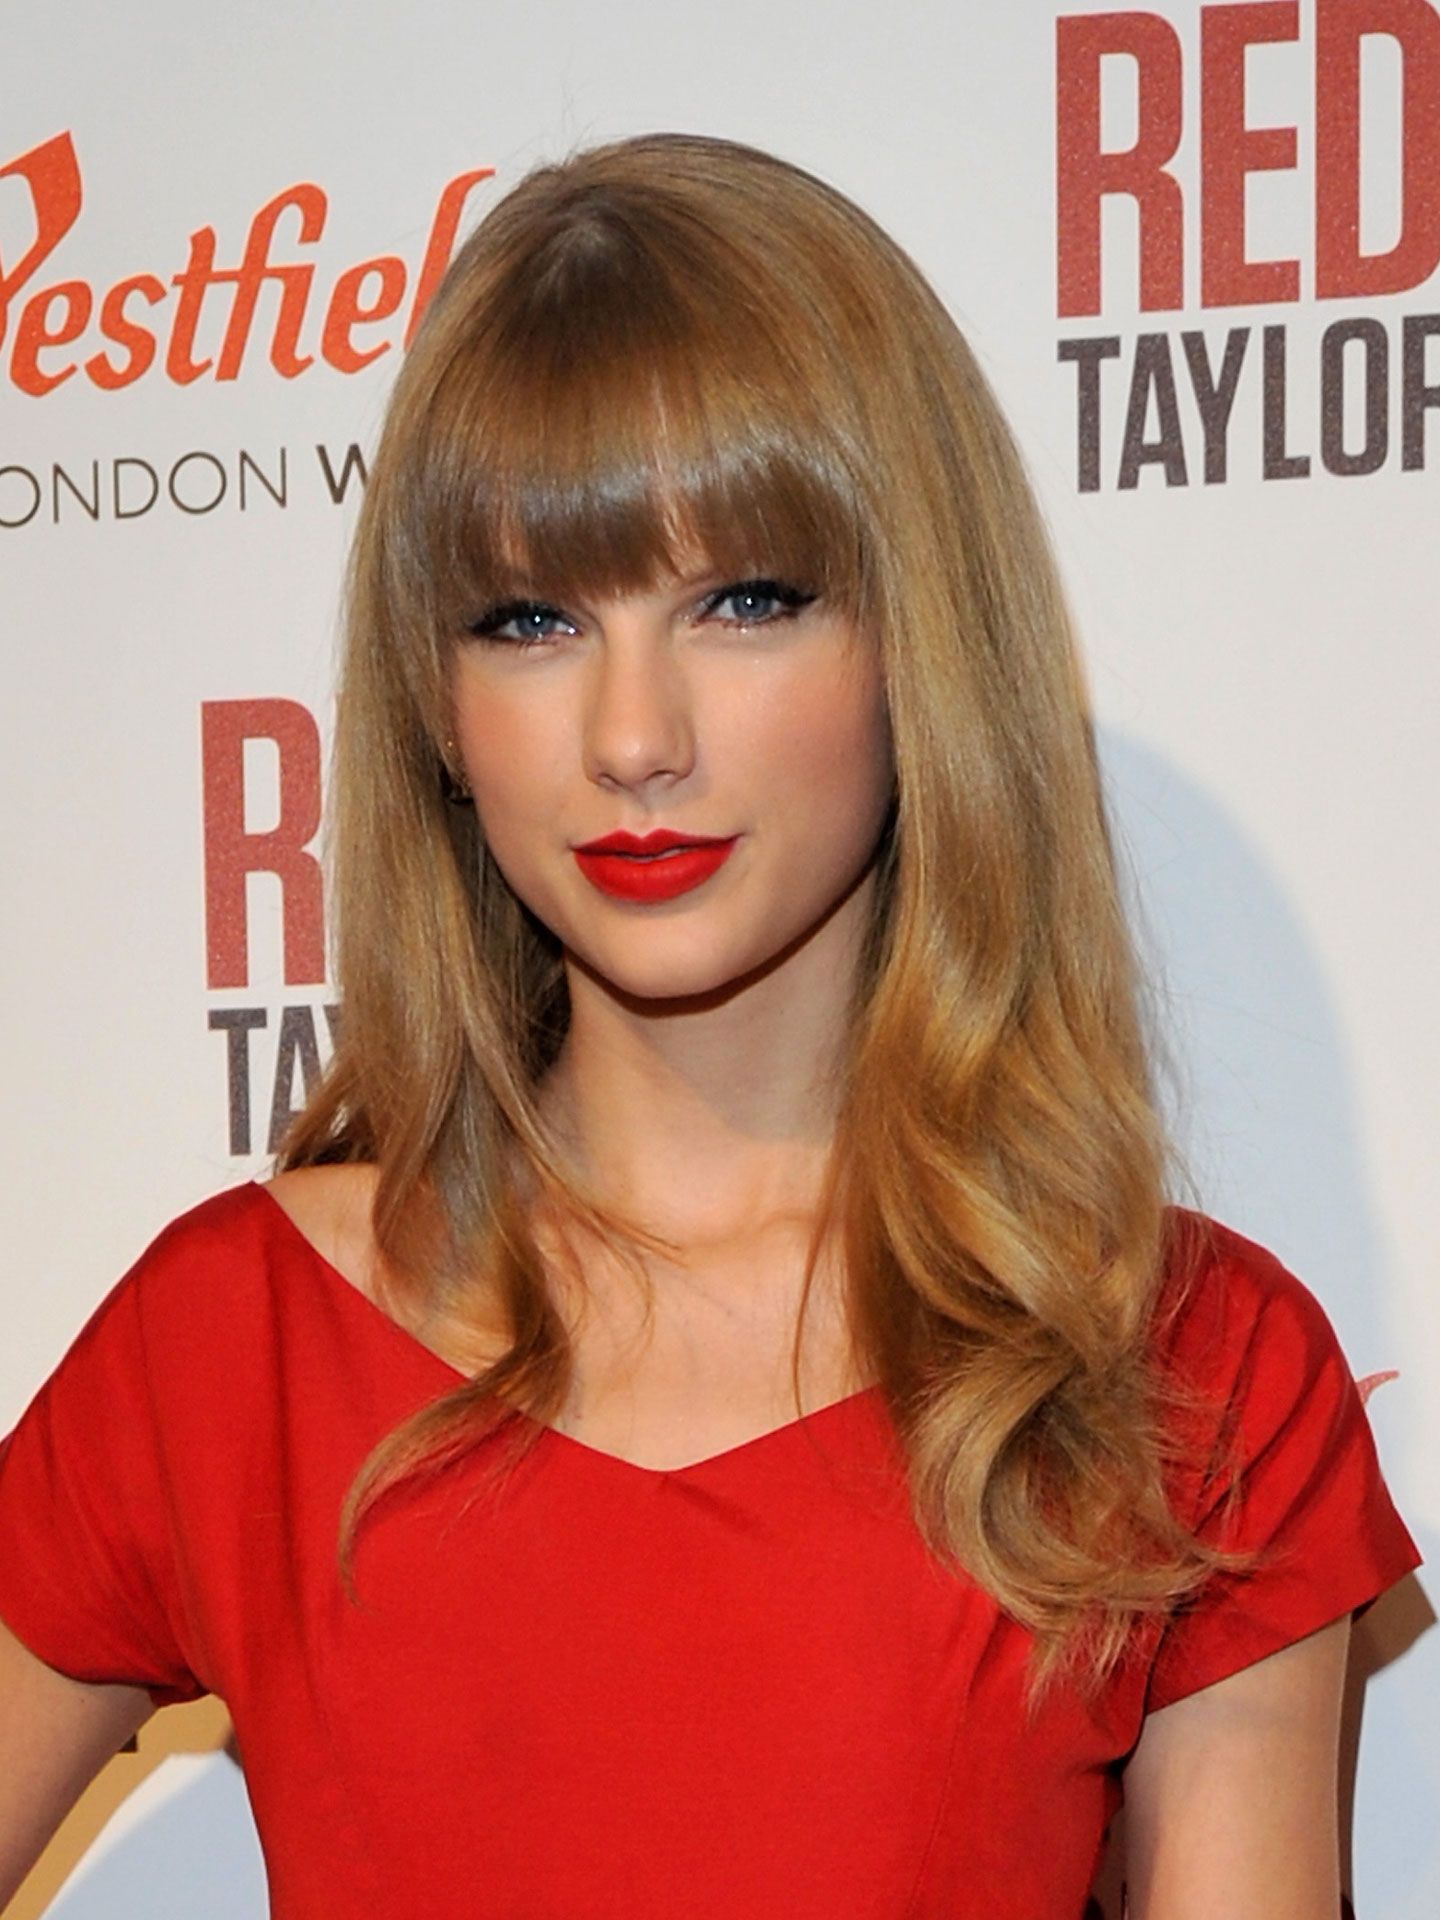 Taylor Swift Break Up Songs Taylor Swift Lyrics About Love